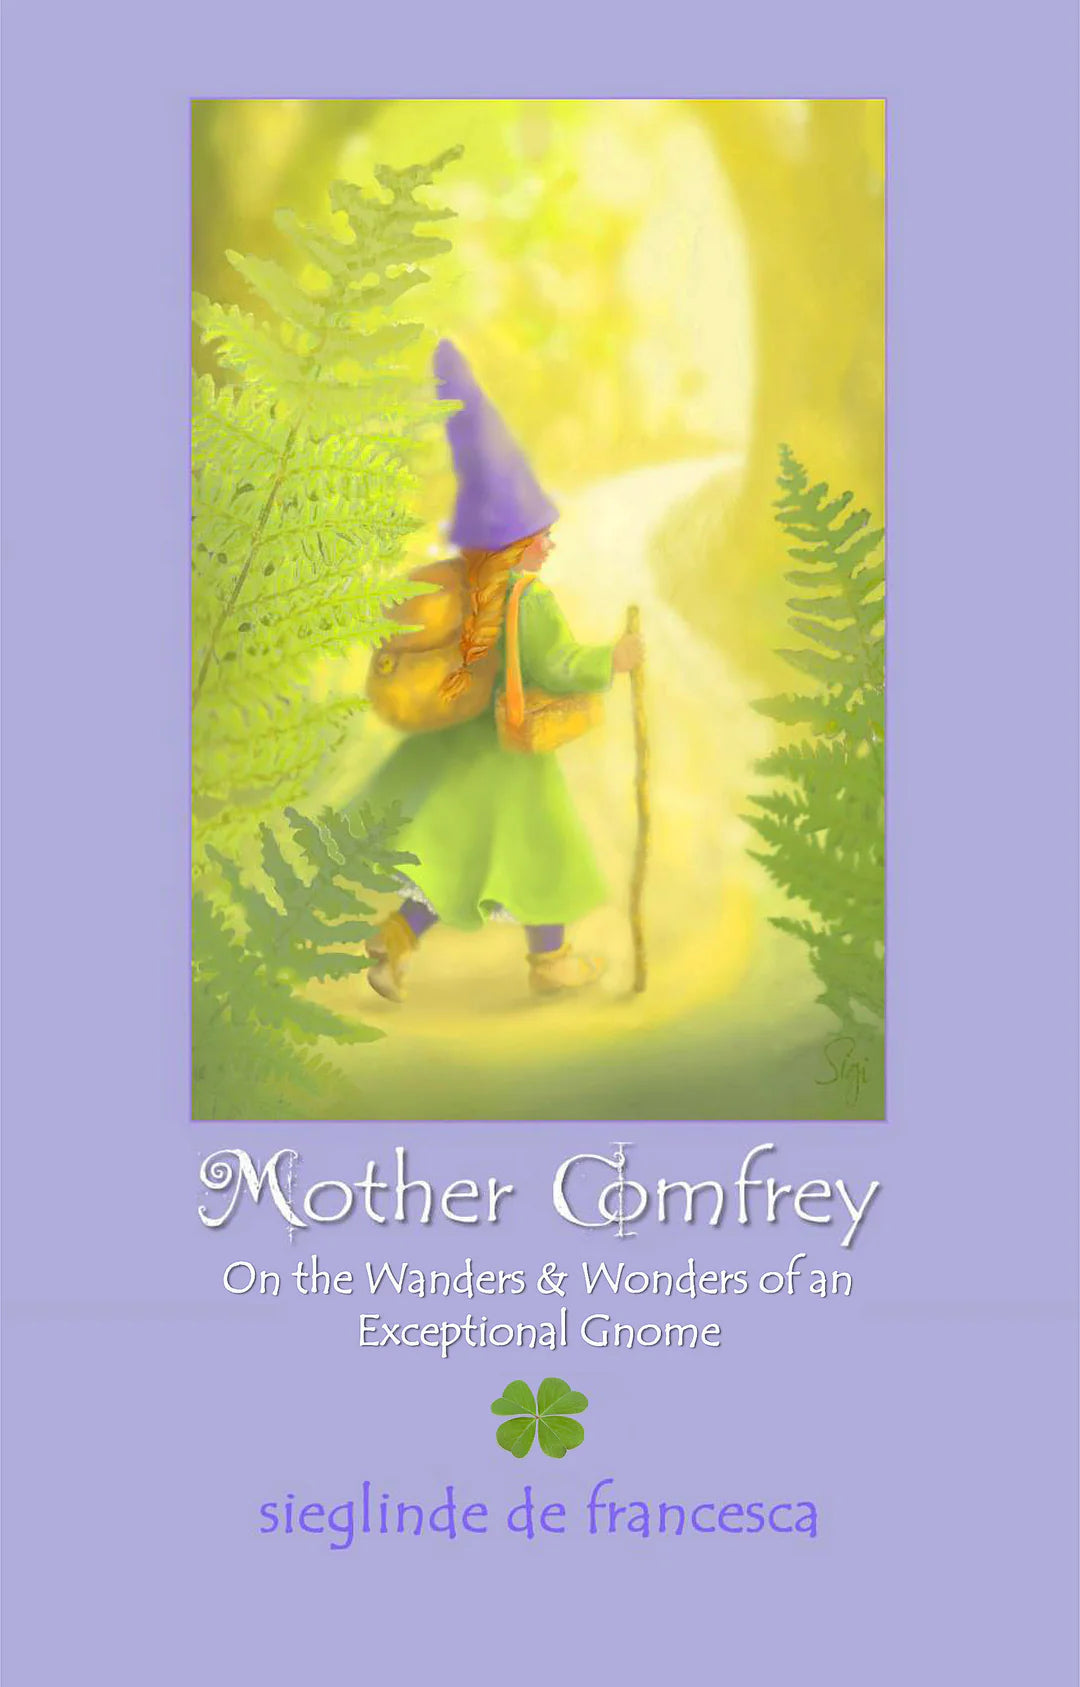 Mother Comfrey Book Cover by Sieglinde de Francesca - Alder & Alouette